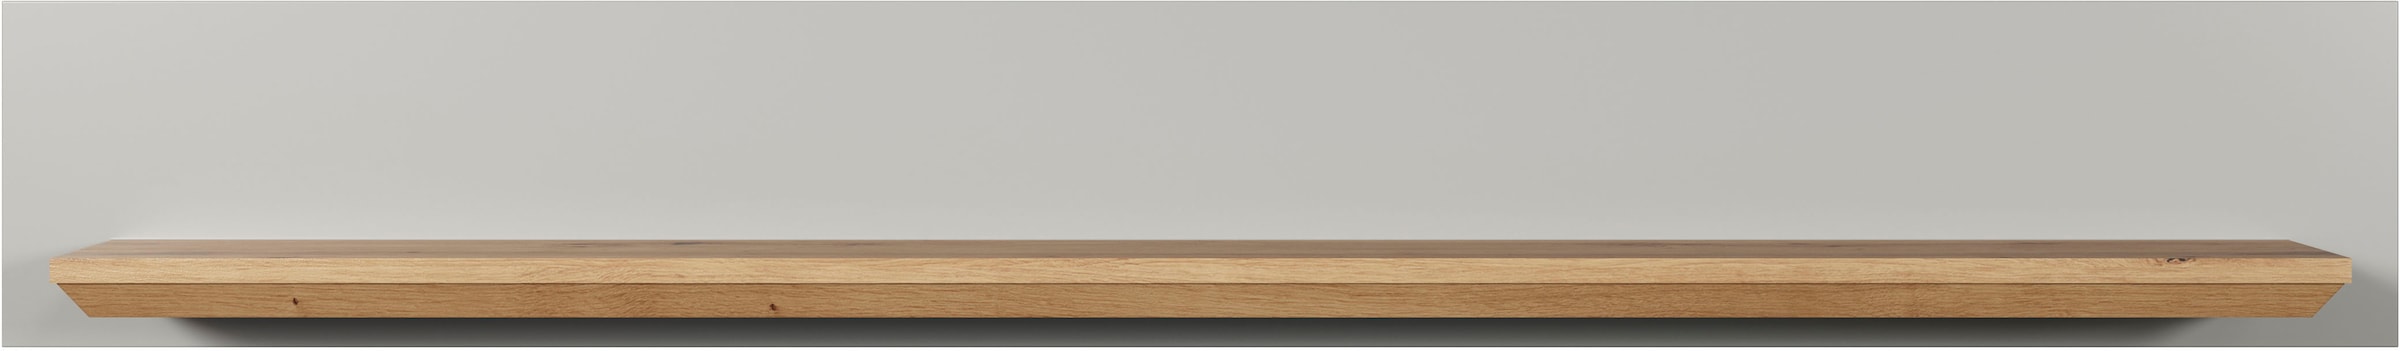 Home affaire Wandboard »Herzwill«, Wandregal, Wandboard, Breite 153 cm,  Höhe 22 cm, grau kaufen bei OTTO